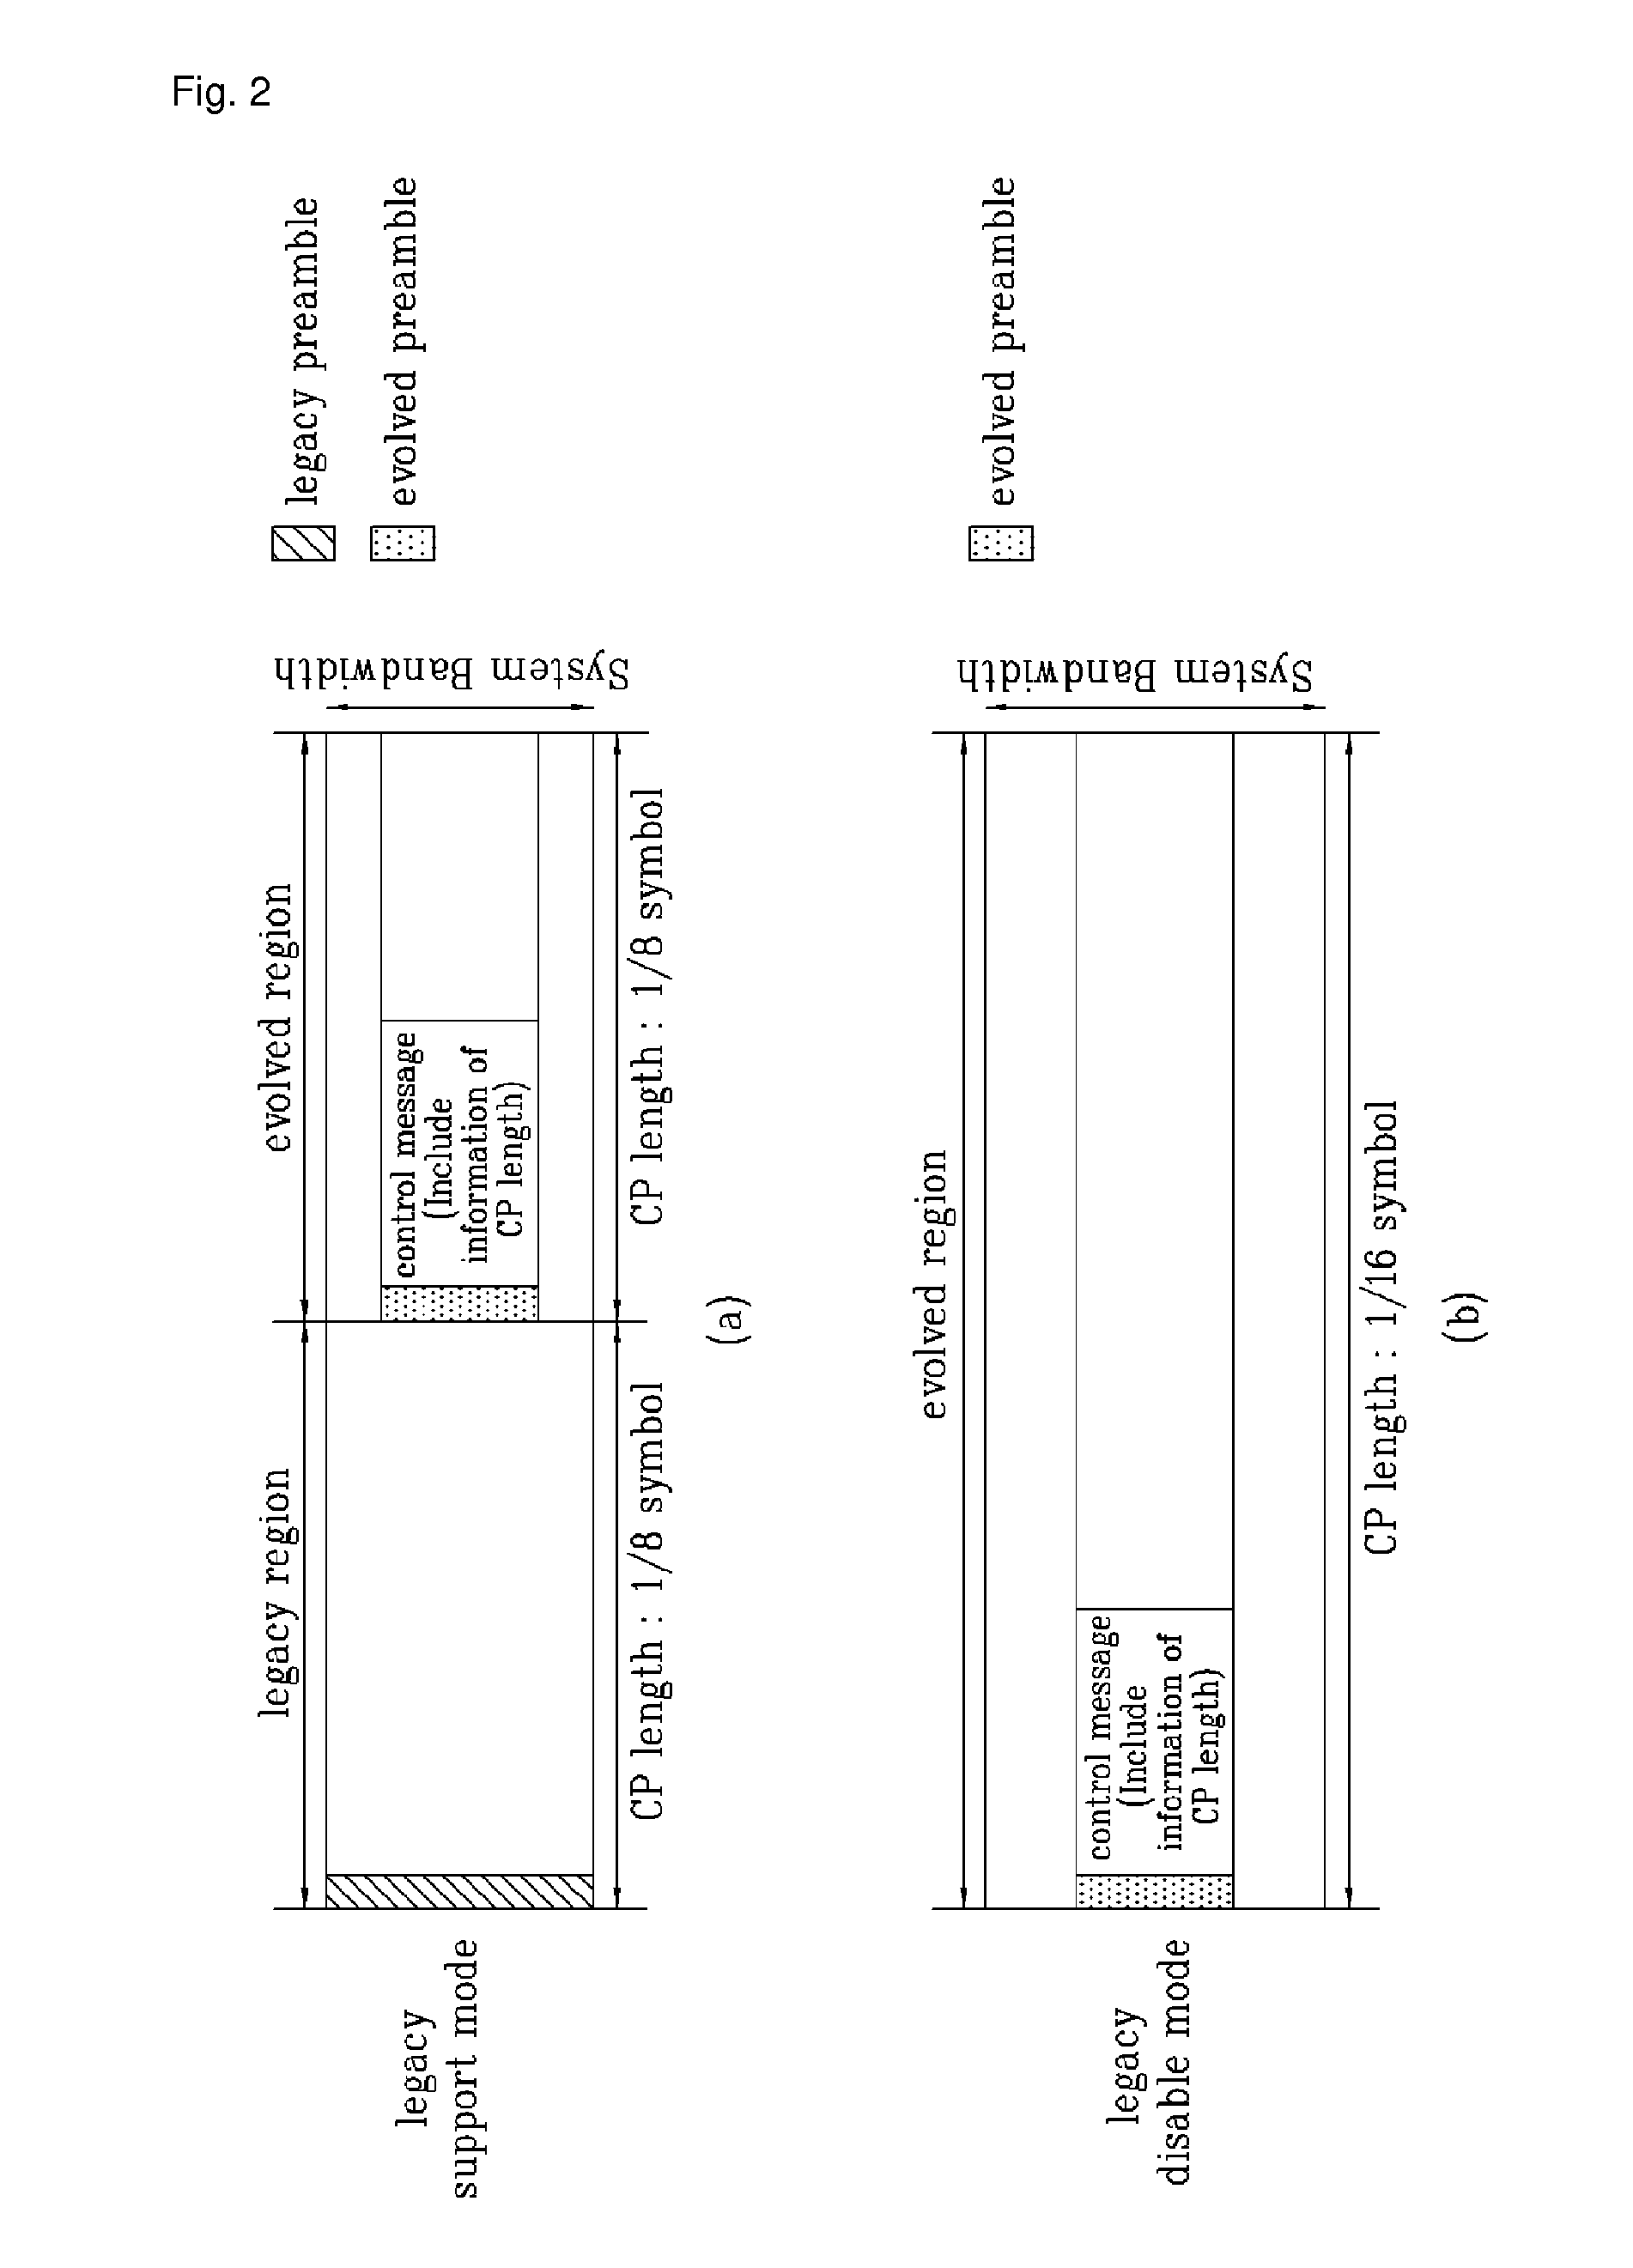 Method of transmitting cyclic prefix length information